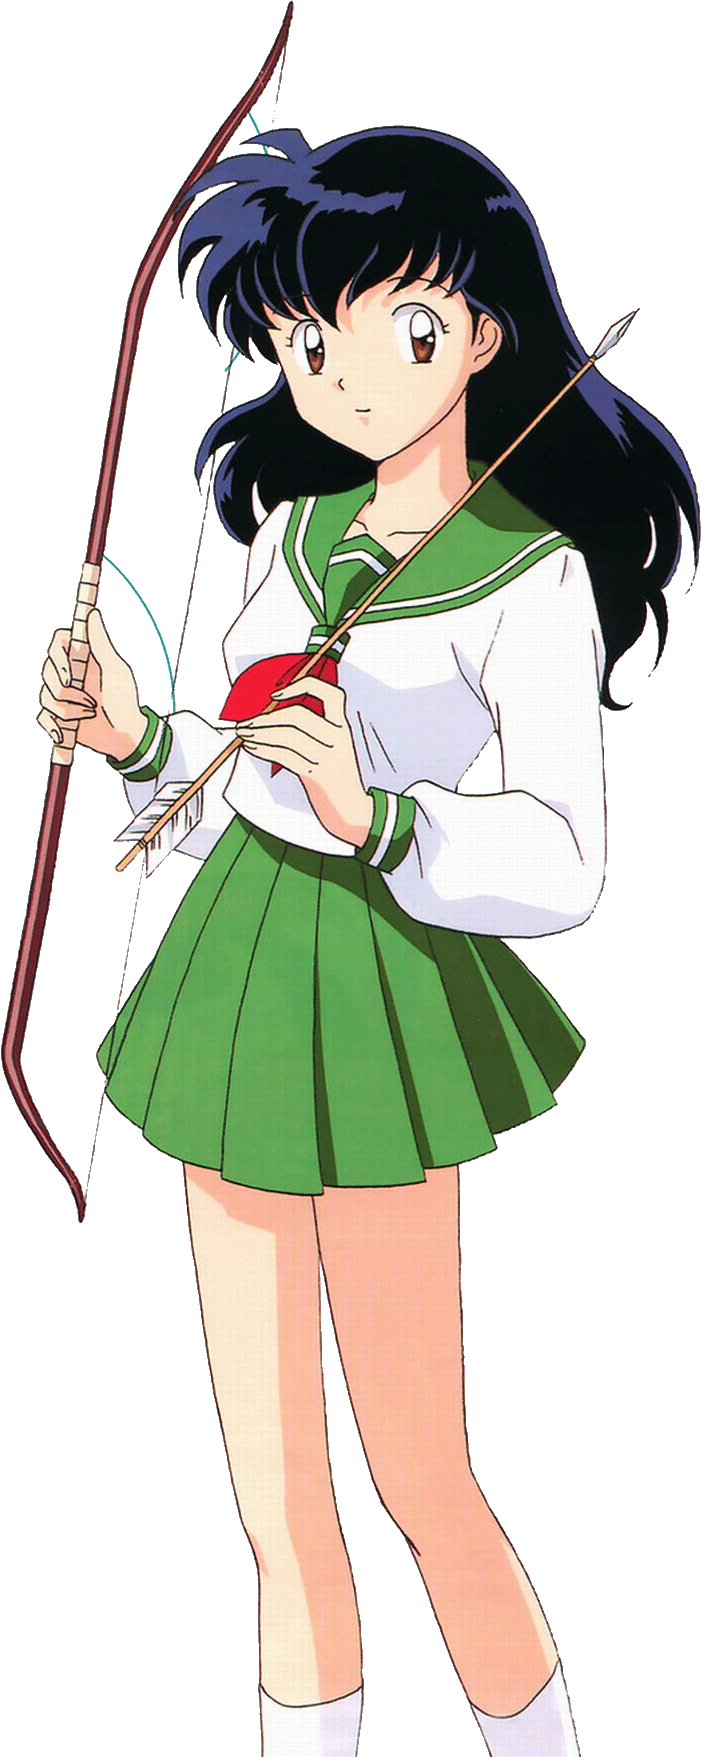 Load 101 More Imagesgrid View - Anime School Uniform Sailor Clipart (800x1785), Png Download